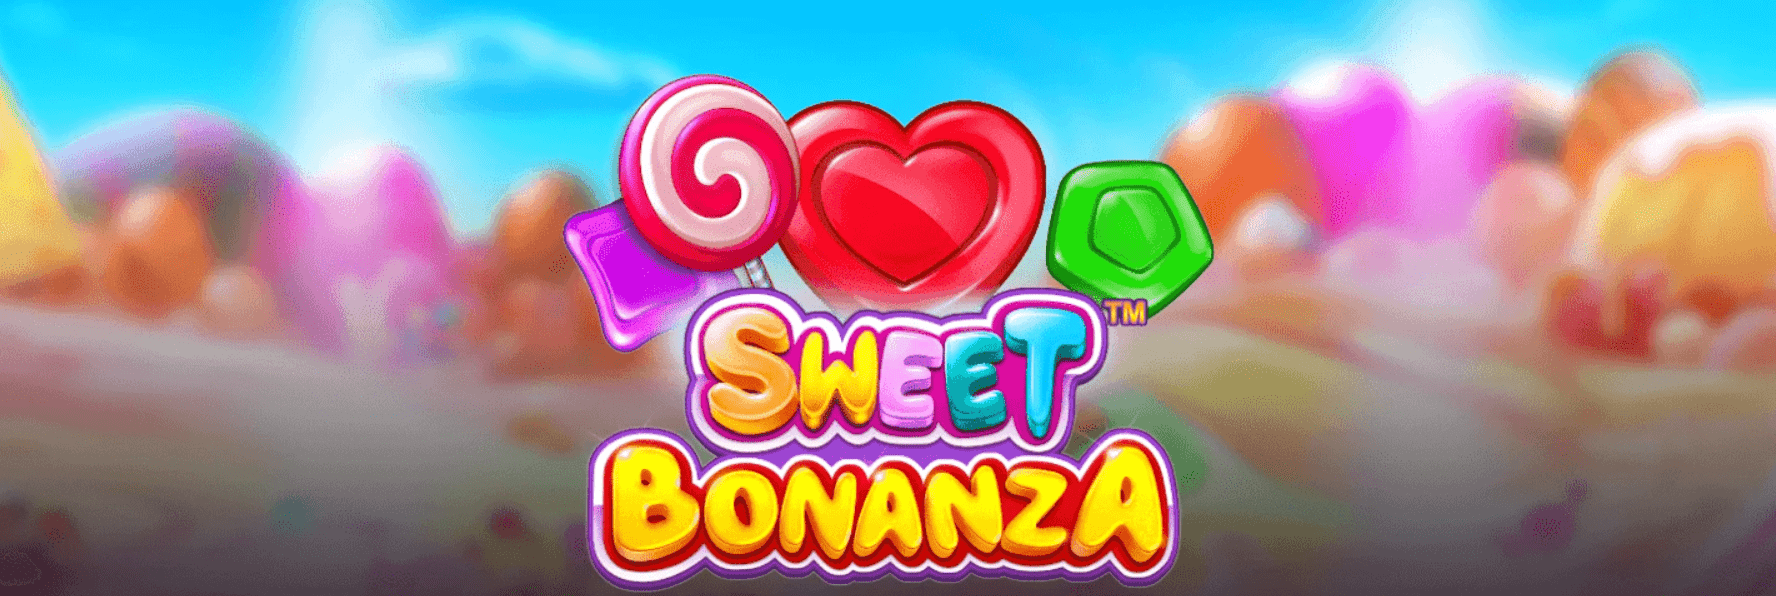 sweet bonanza slot spin